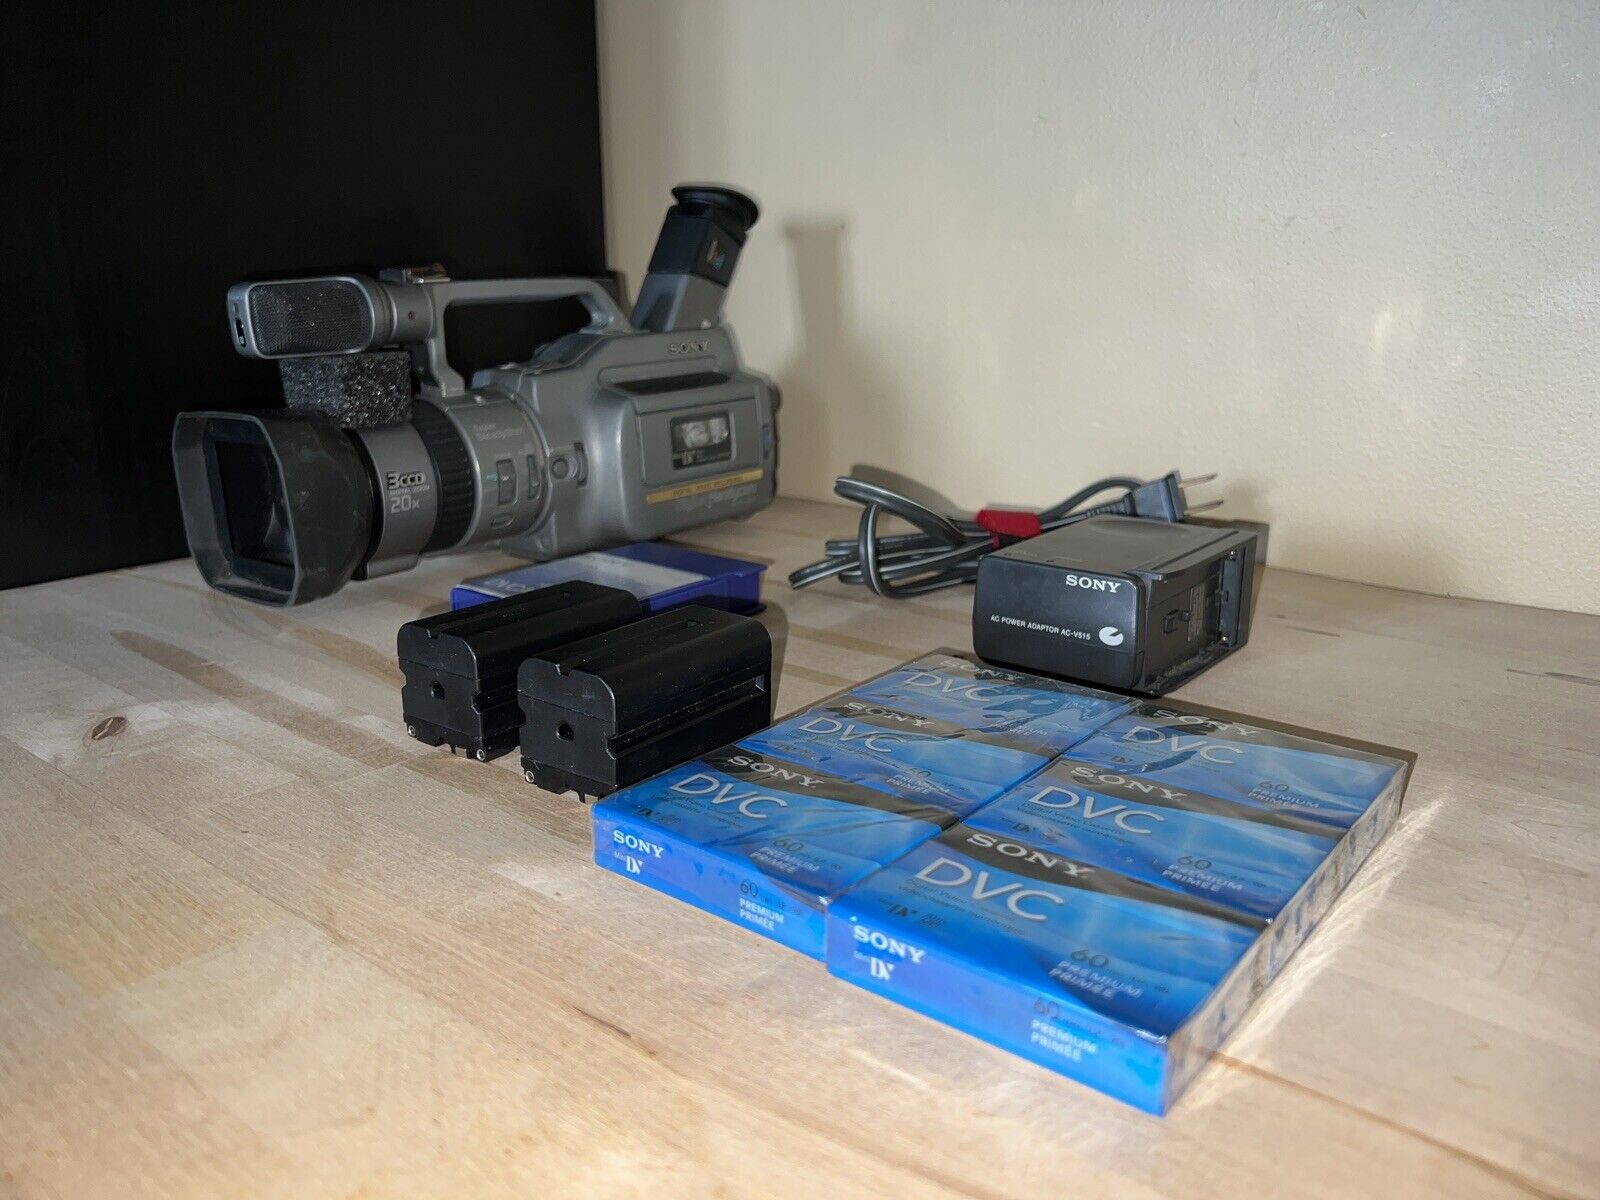 Sony DCR-VX1000 ENGLISH Camcorder 3CCD MiniDV Professional Video Camera